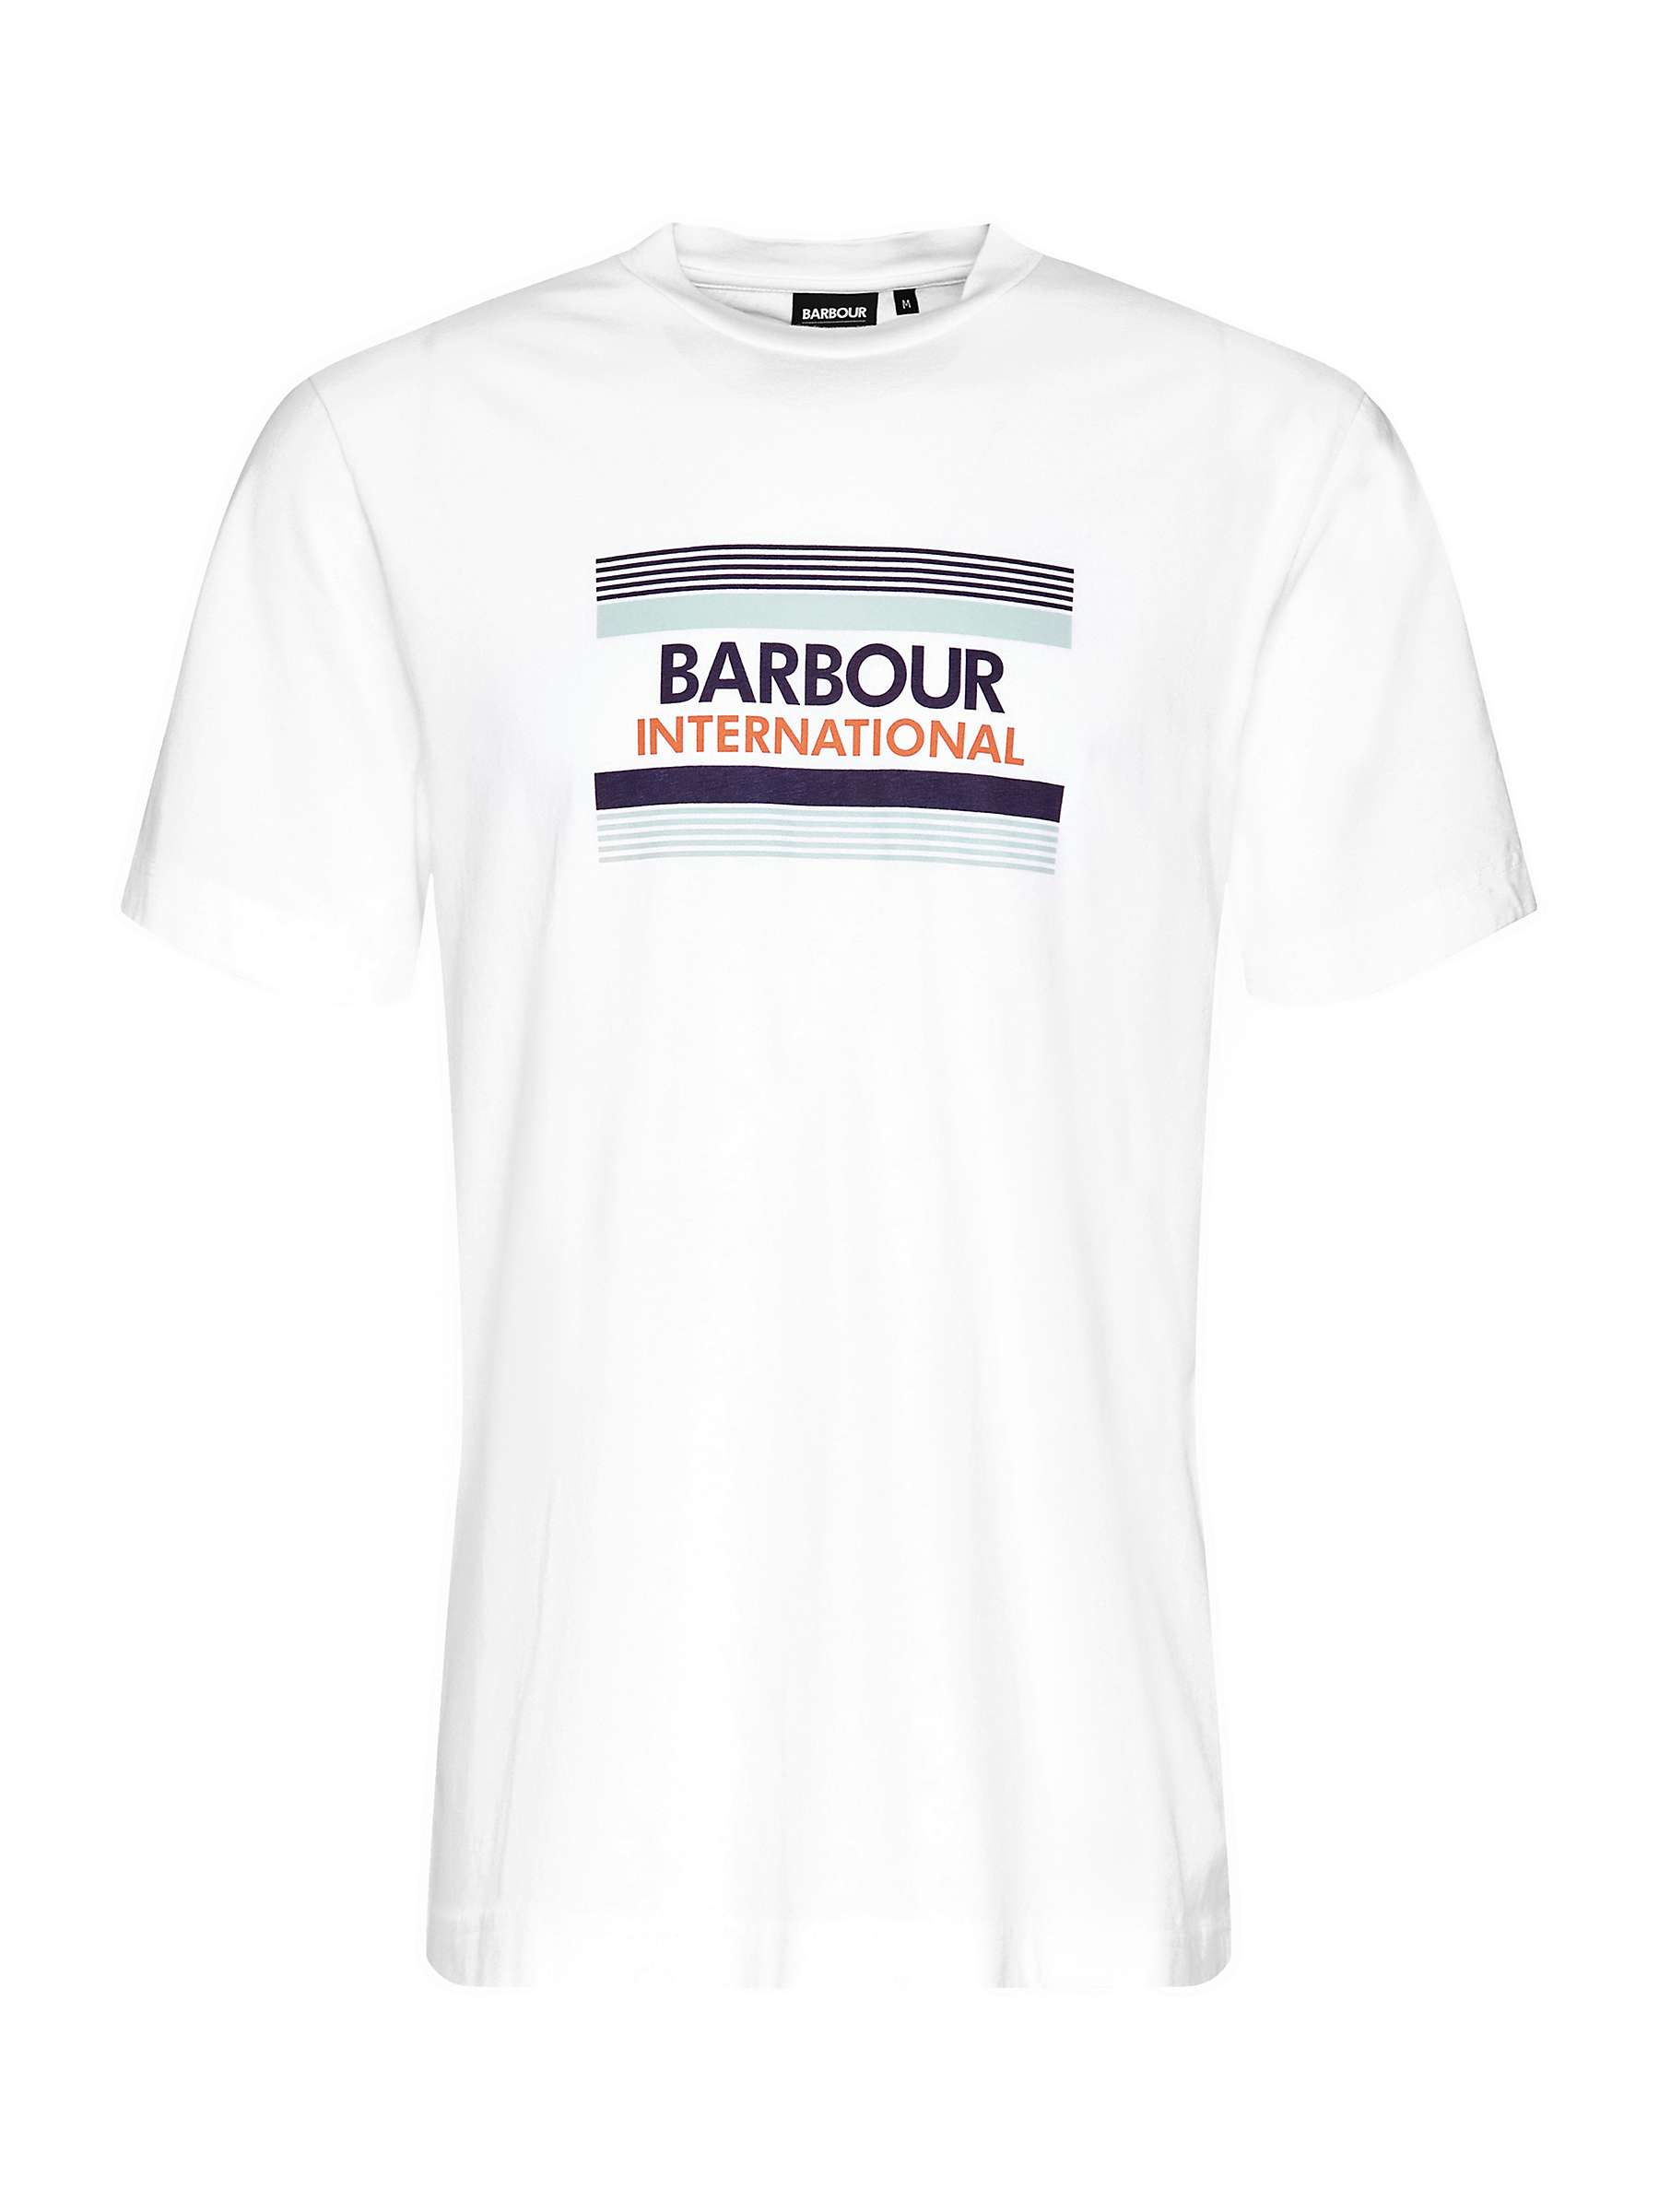 Buy Barbour International Radley T-Shirt Online at johnlewis.com